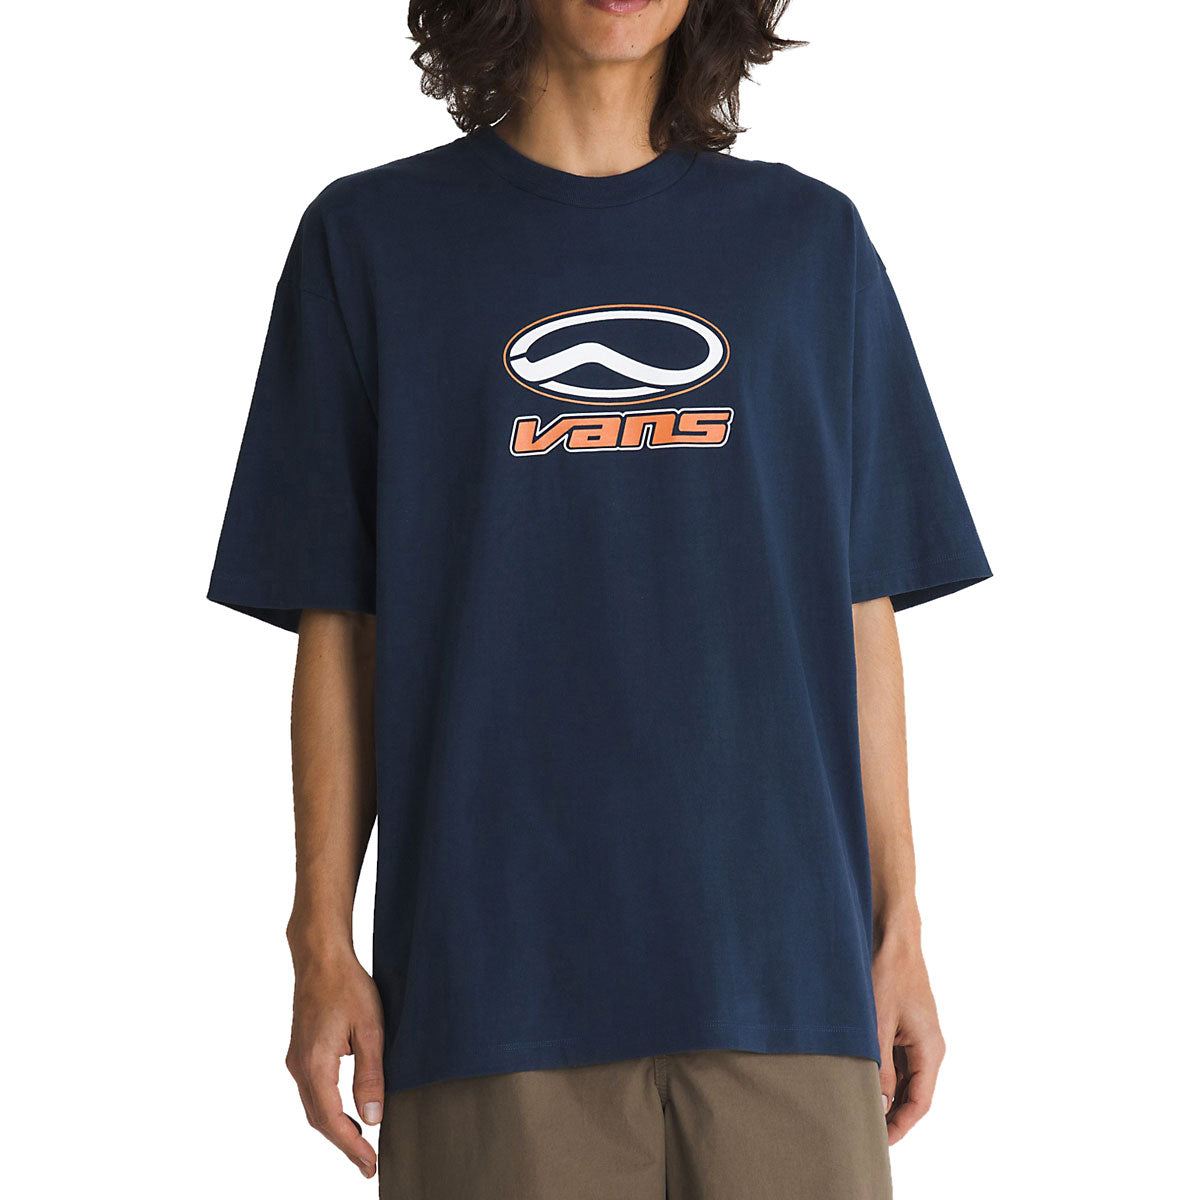 Vans Off The Wall II Loose Skate Classics T-Shirt - Dress Blues image 2